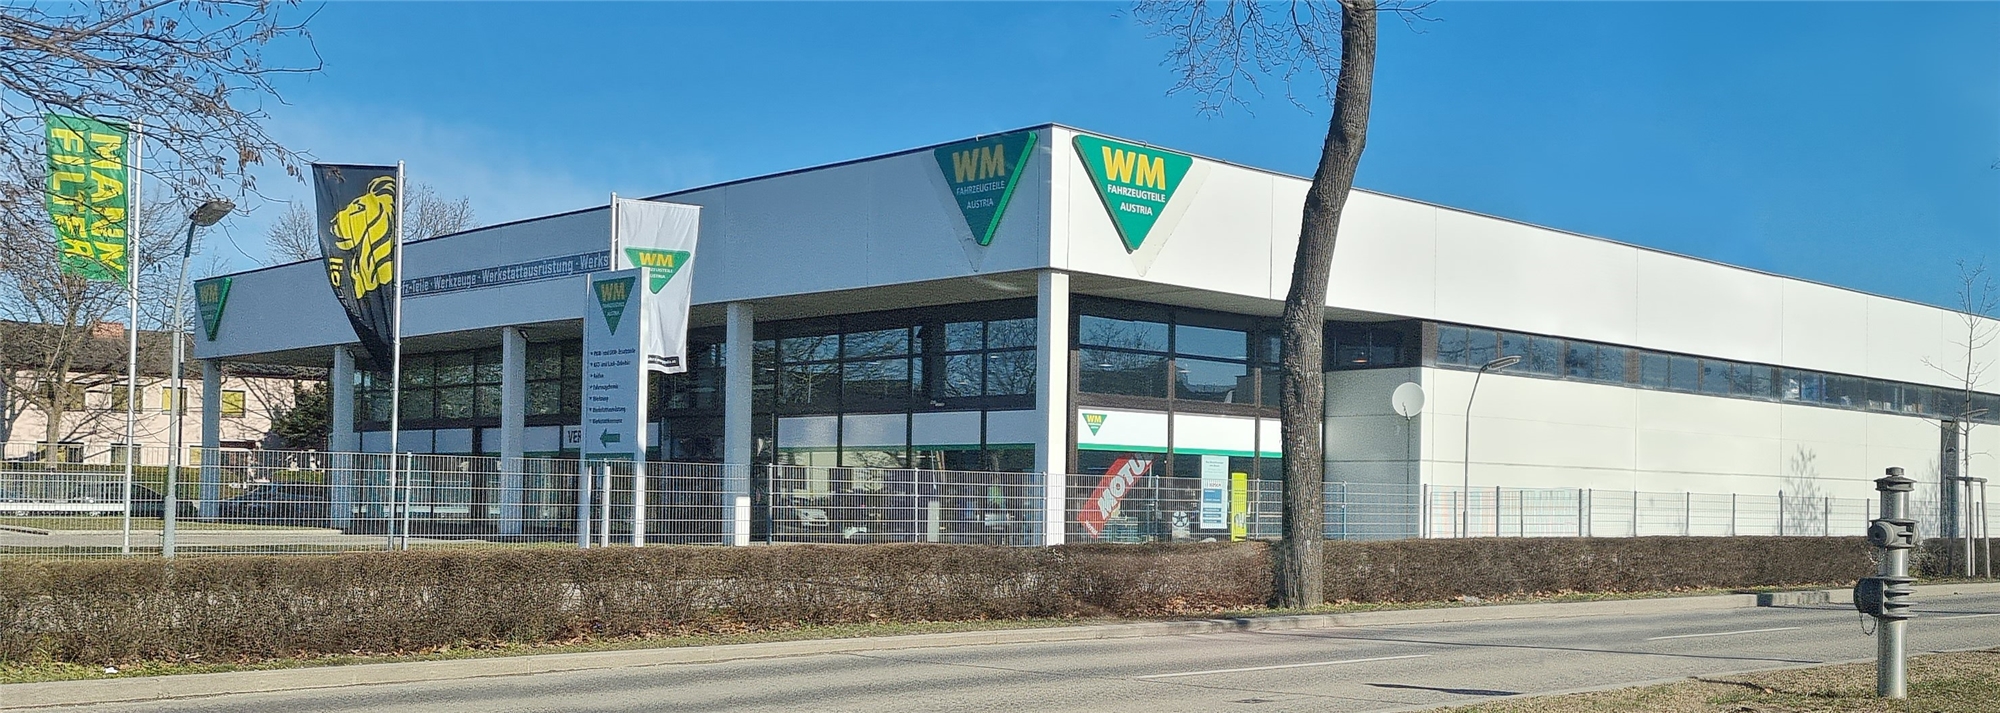 WM Fahrzeugteile Austria GmbH in 1220 Wien | Handels GmbH | WKO Firmen A-Z